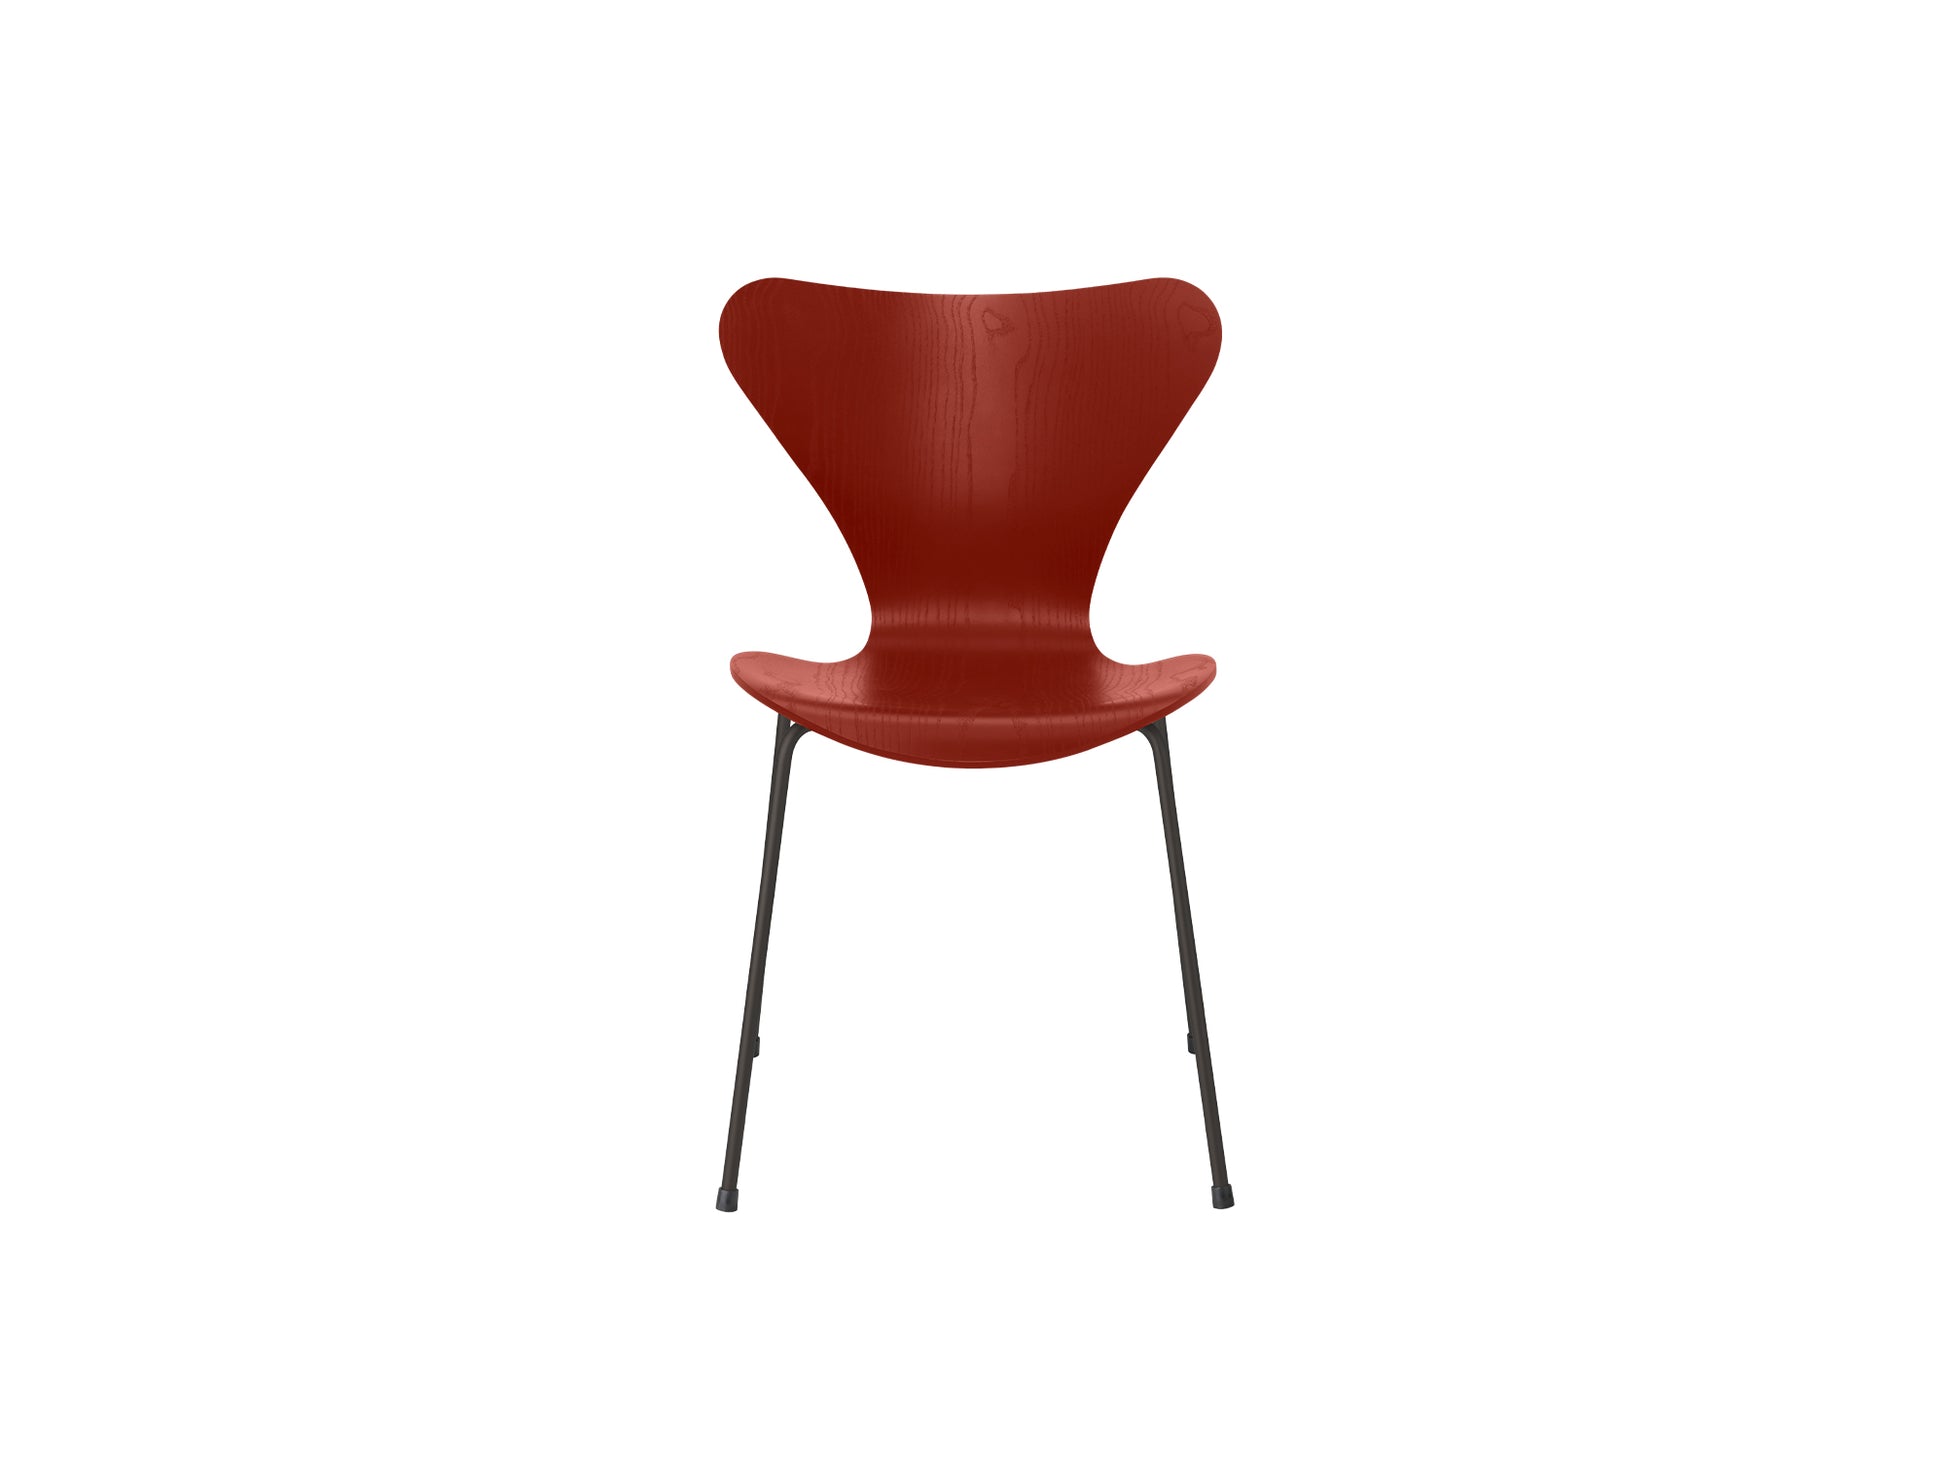 Series 7™ 3107 Dining Chair by Fritz Hansen - Venetian Red Coloured Ash Veneer Shell / Warm Graphite Steel